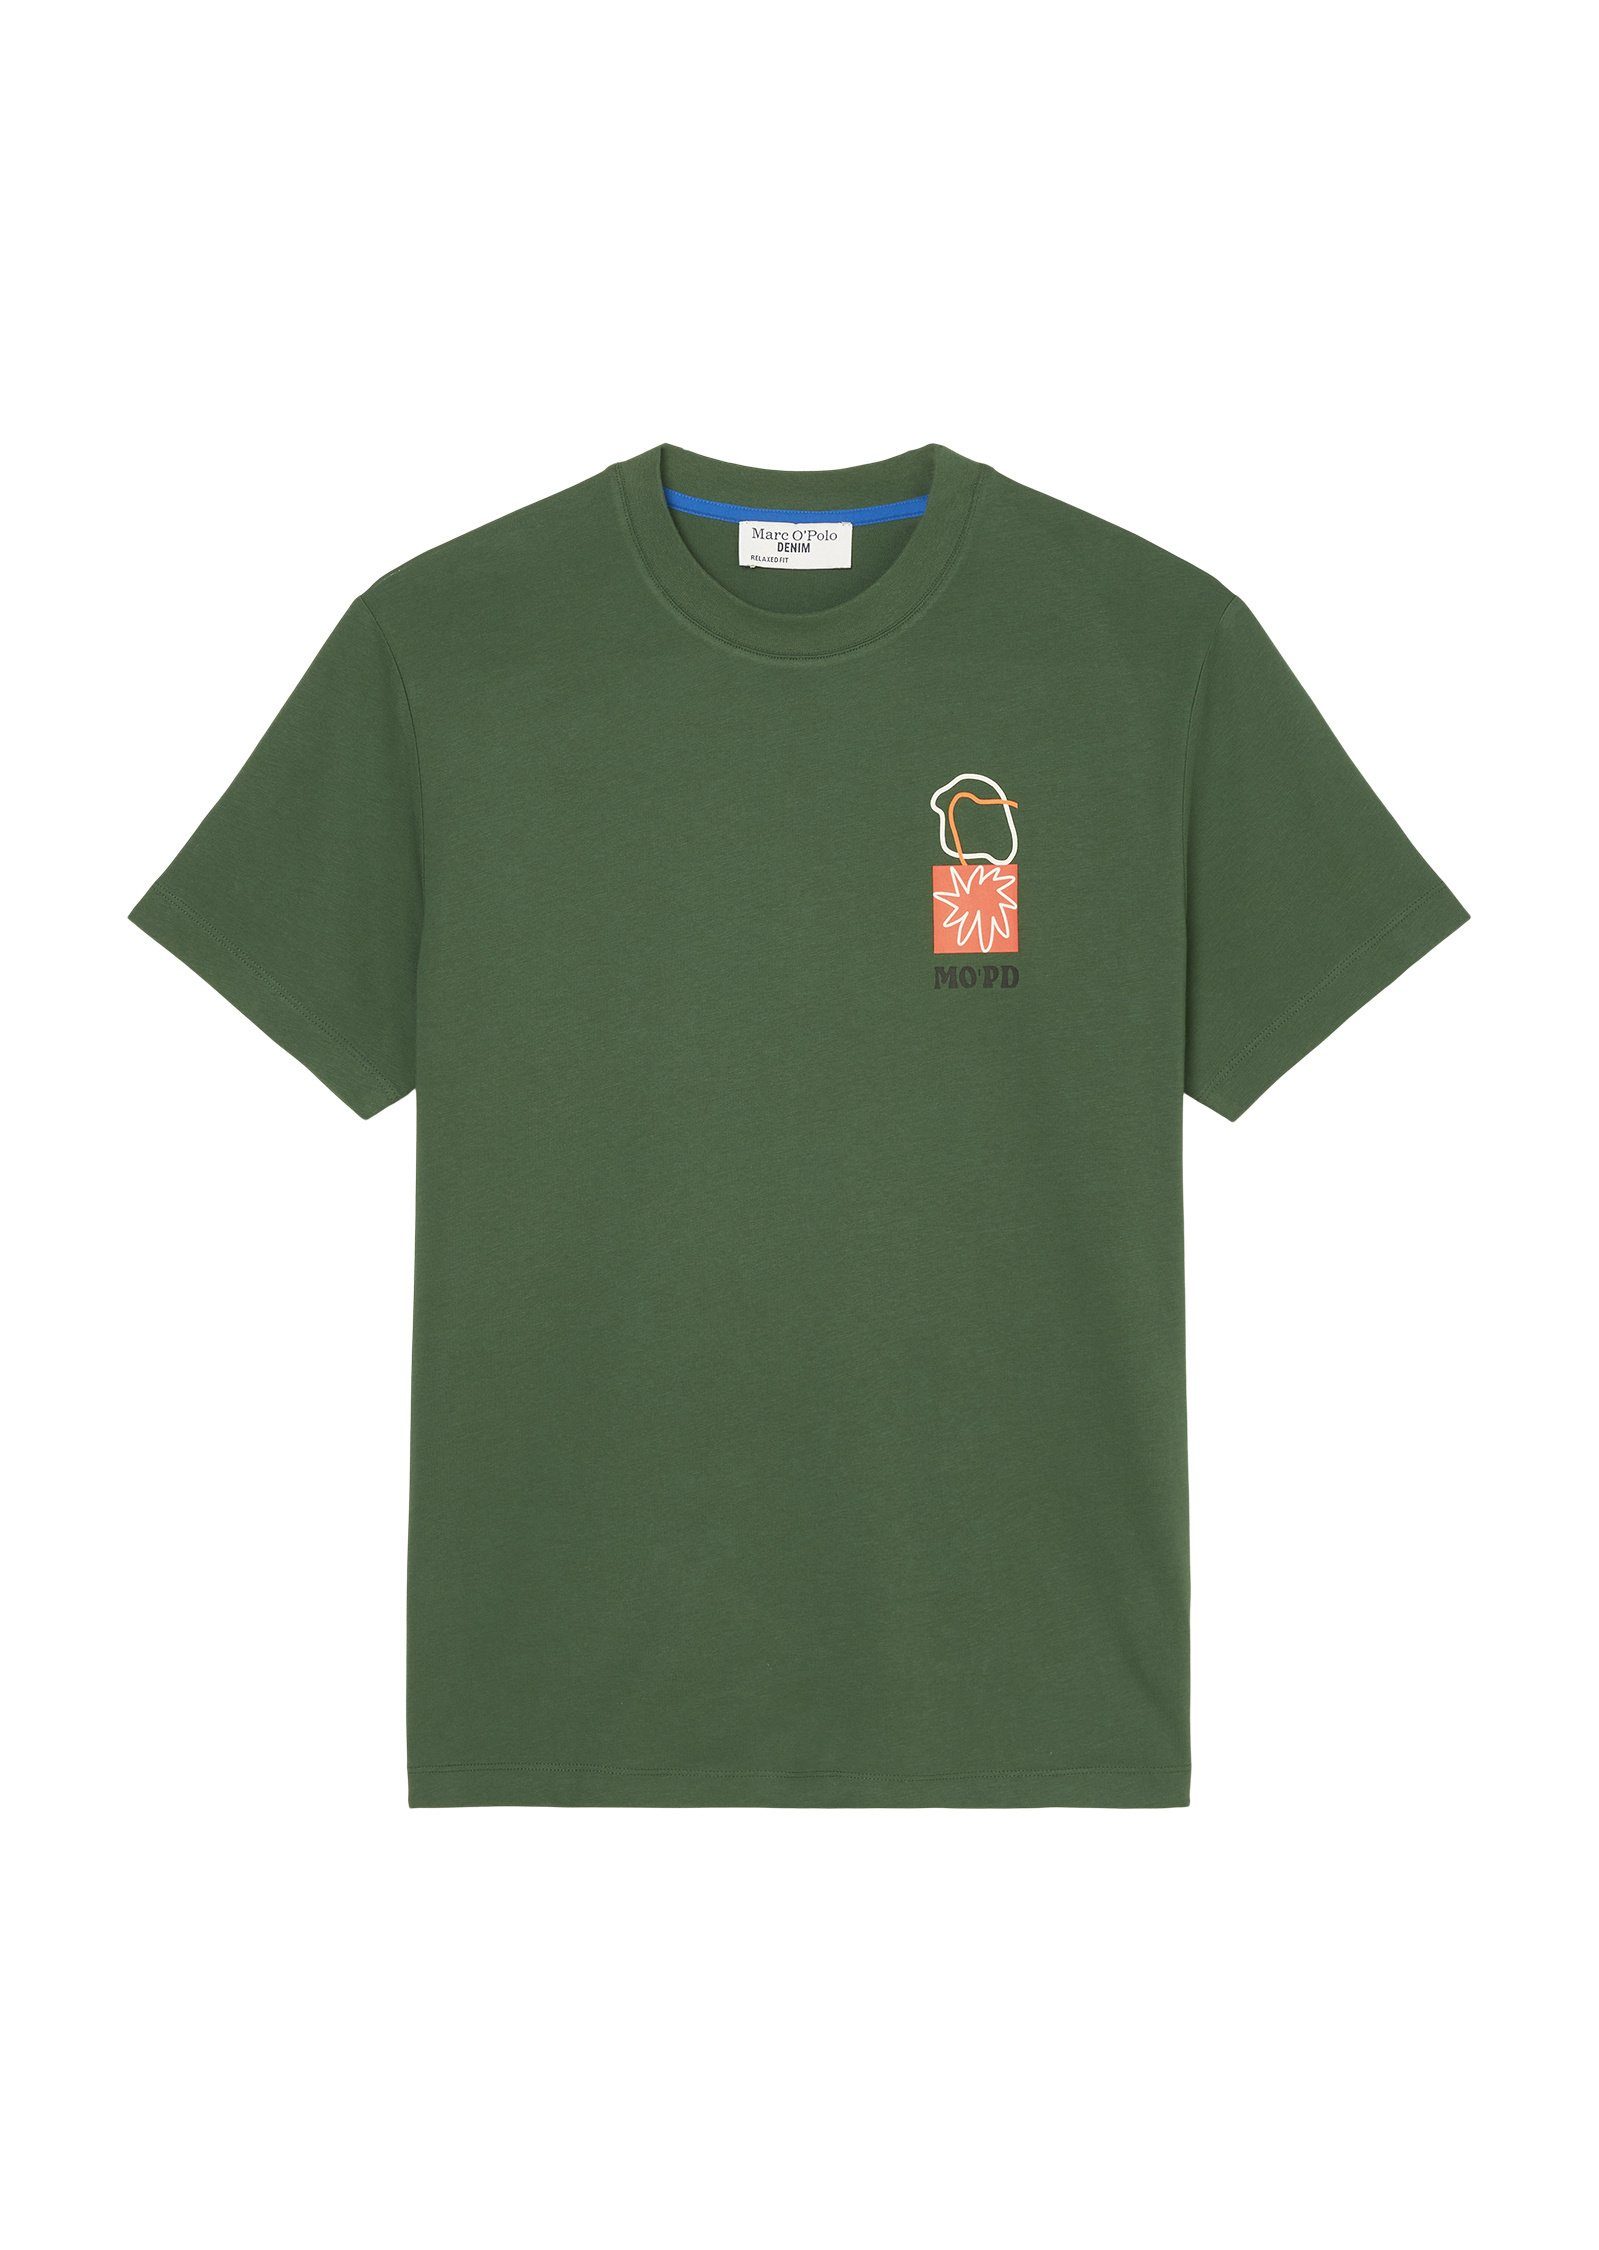 nach grün Marc O'Polo je Farbe Rückenprint T-Shirt markantem mit DENIM